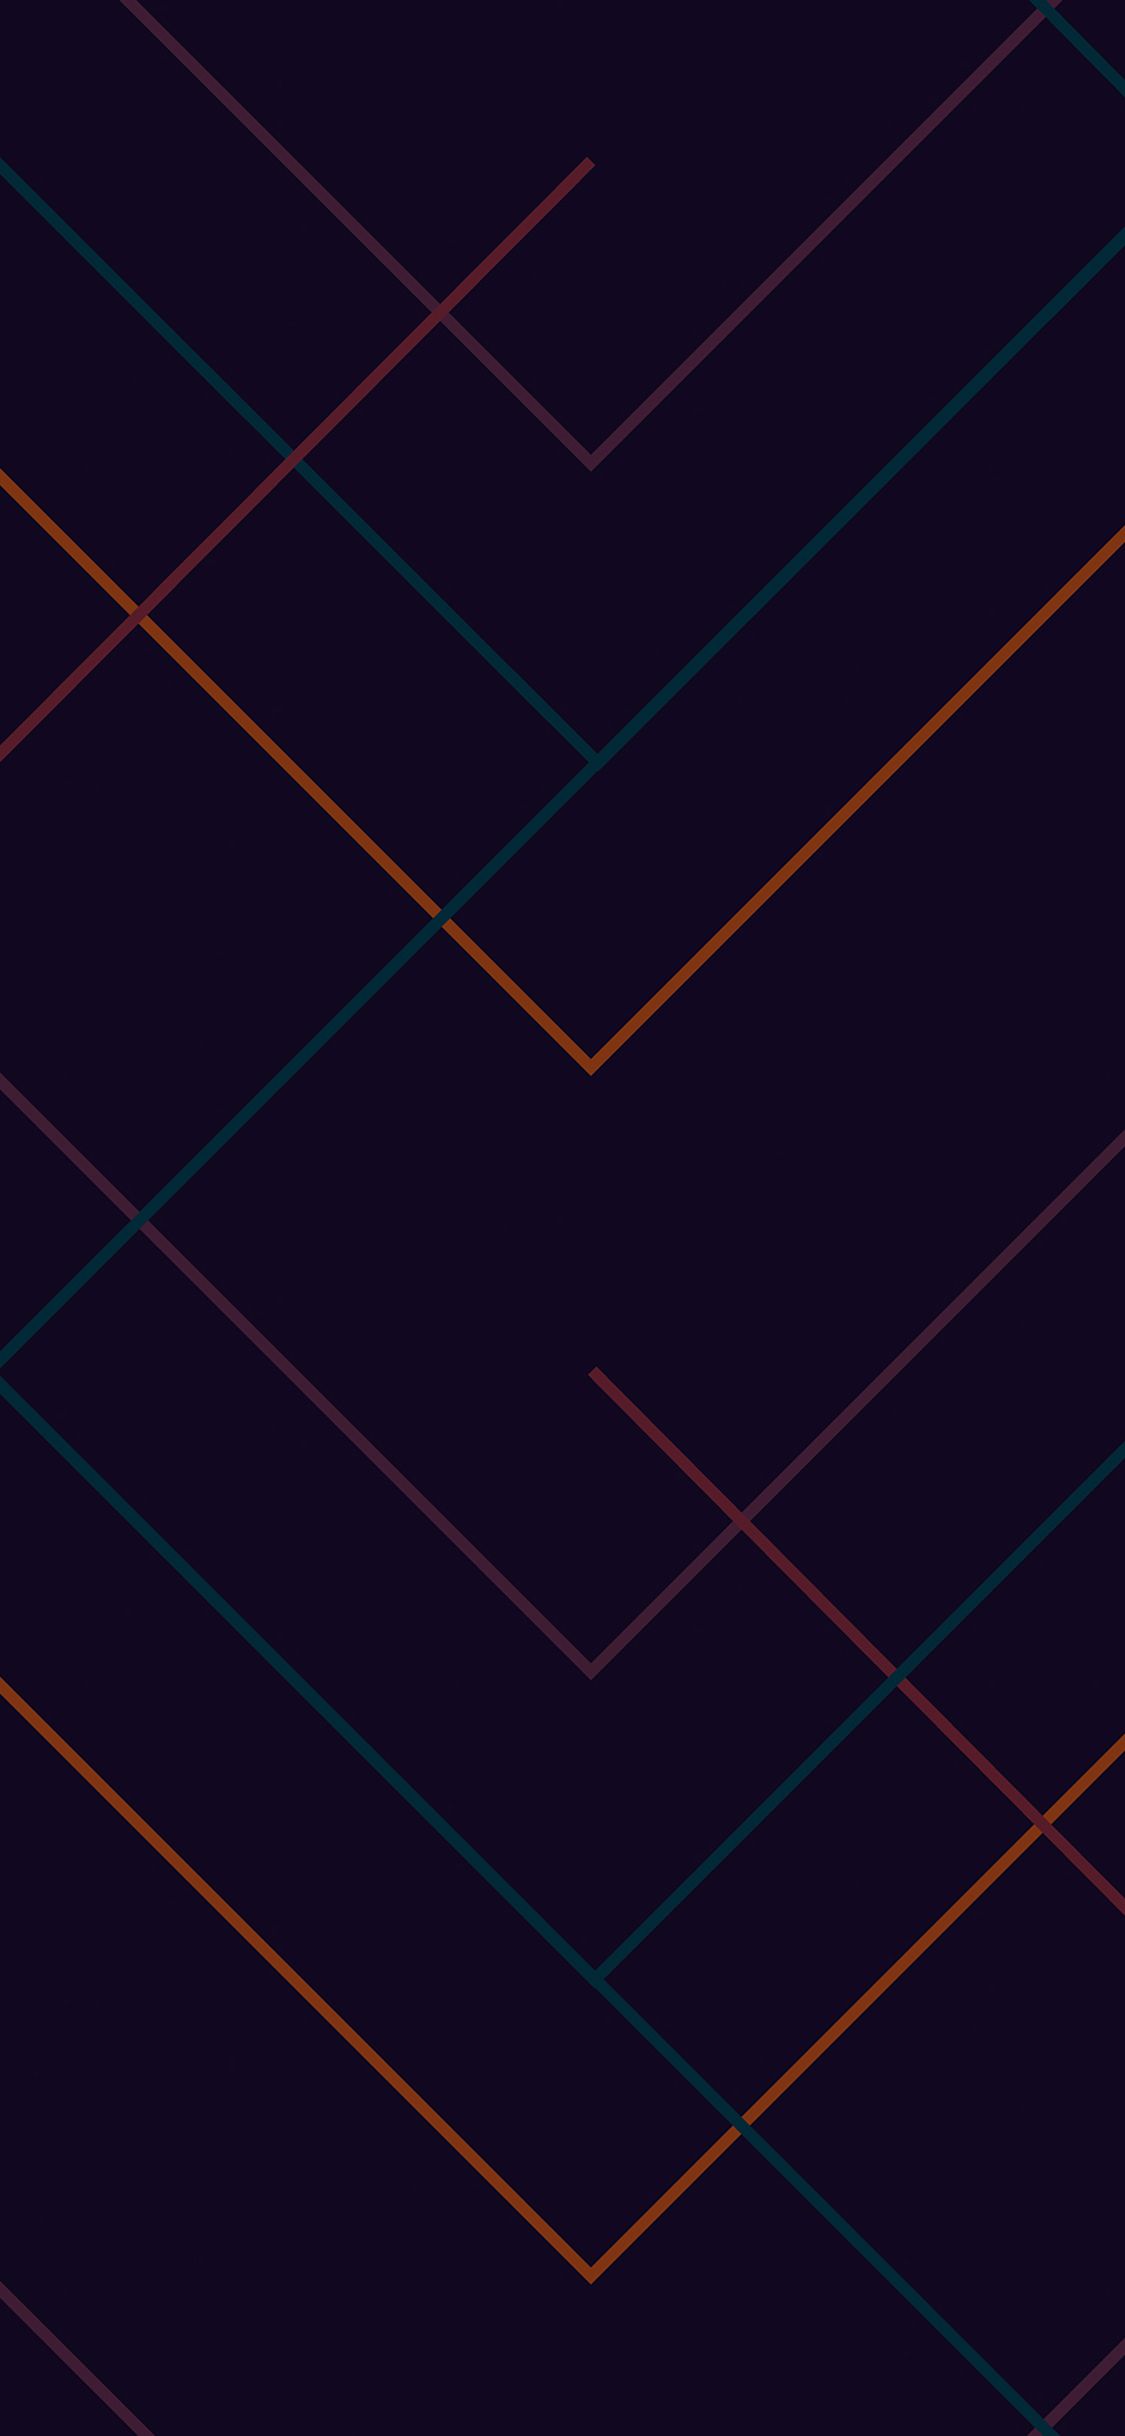 Abstract Dark Geometric Line Pattern